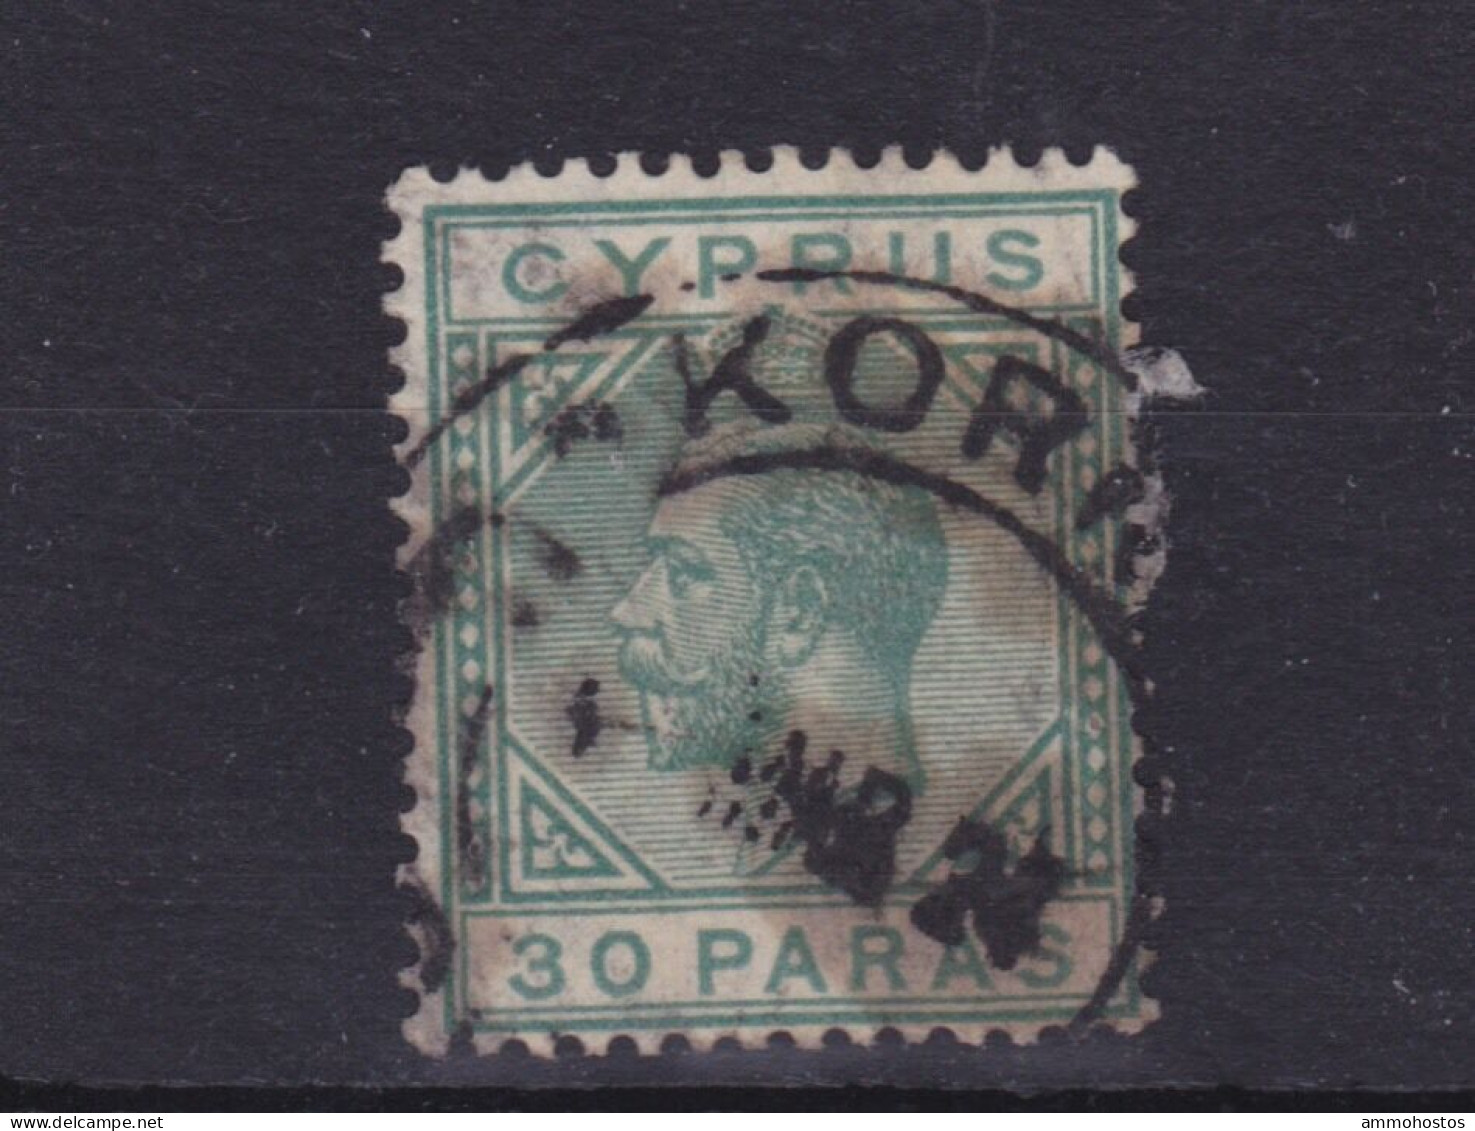 CYPRUS KGV KORNOS RARE RURAL POSTMARK 1924 RARE - Cyprus (...-1960)